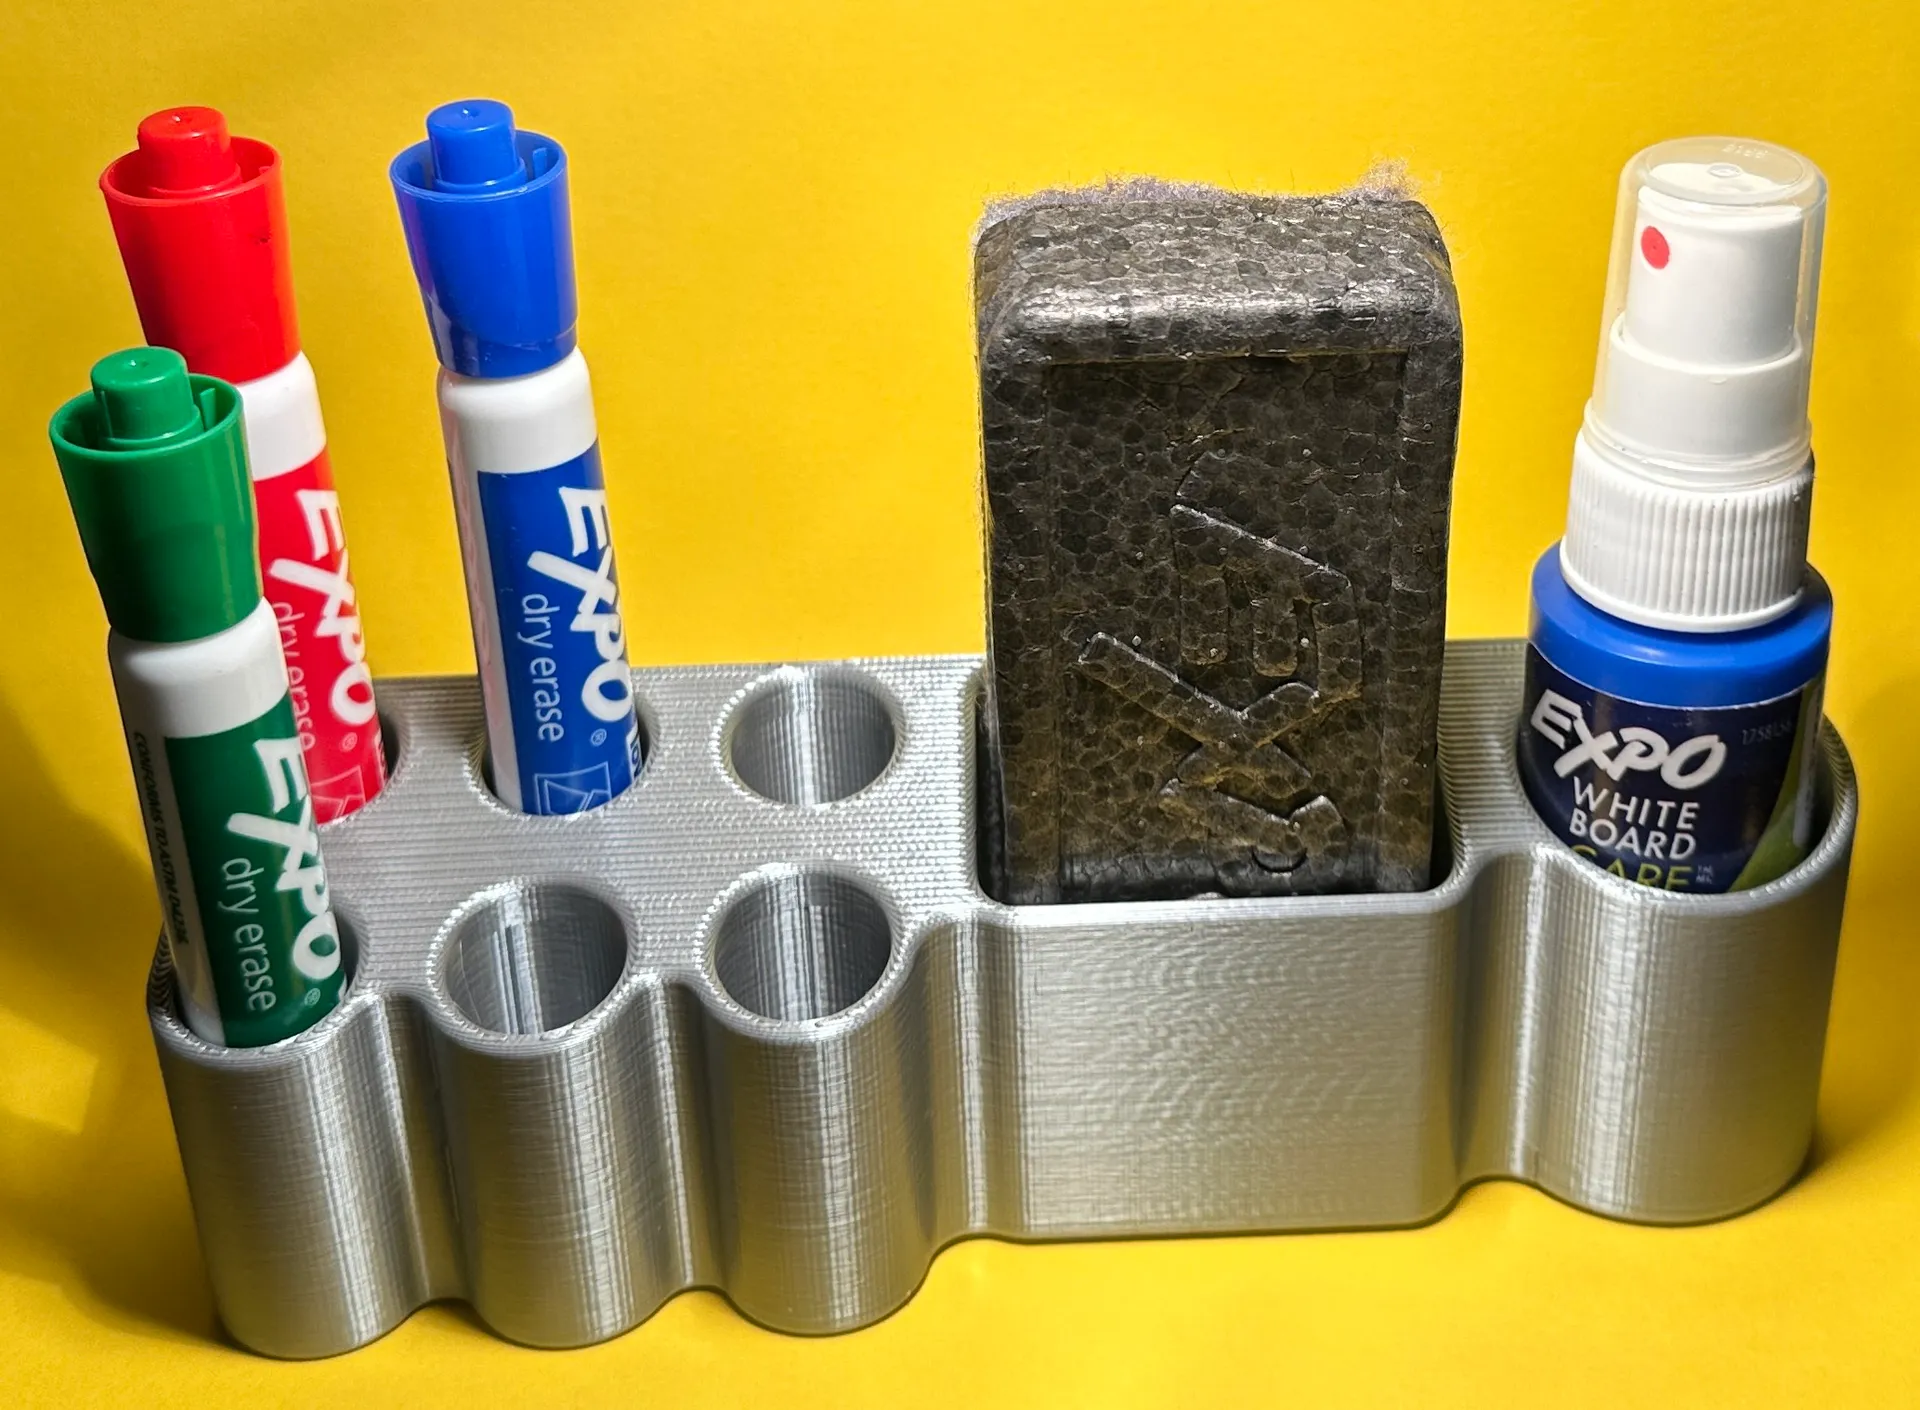 Expo Dry Erase Marker Set Modell von lendres, Foto von VisualReversal